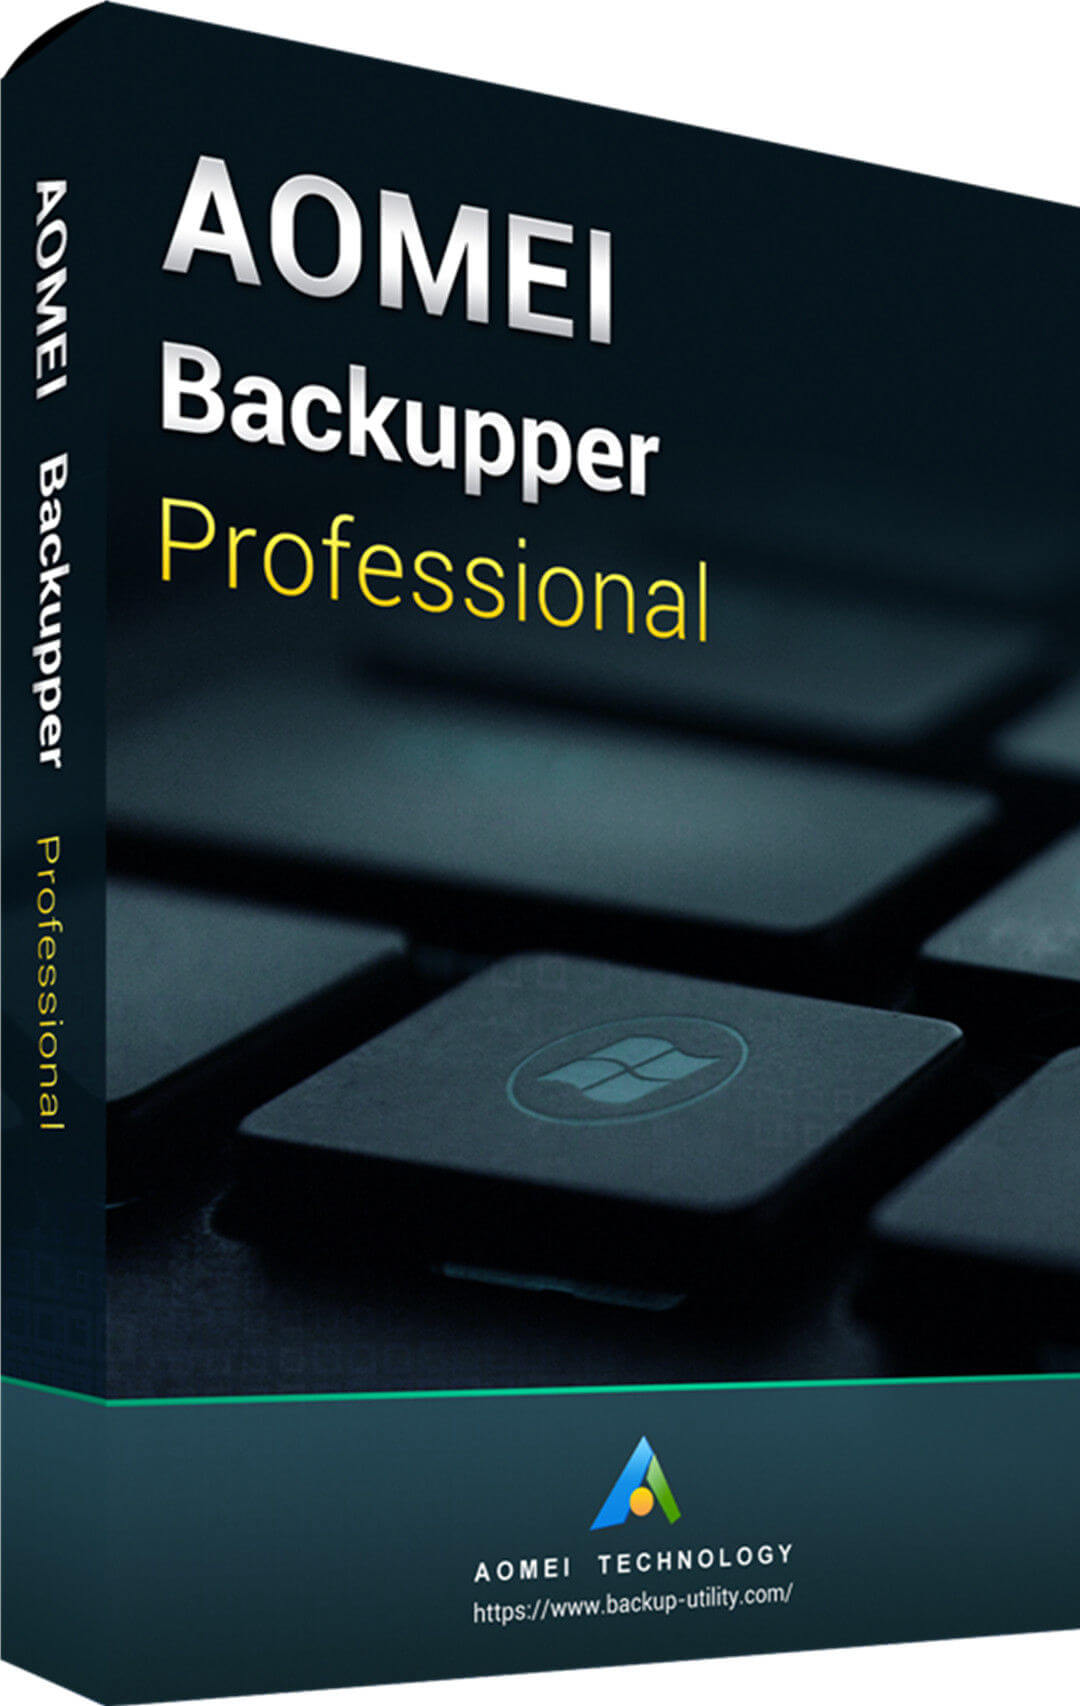 AOMEI Backupper Professional 7.3.1 for windows instal free